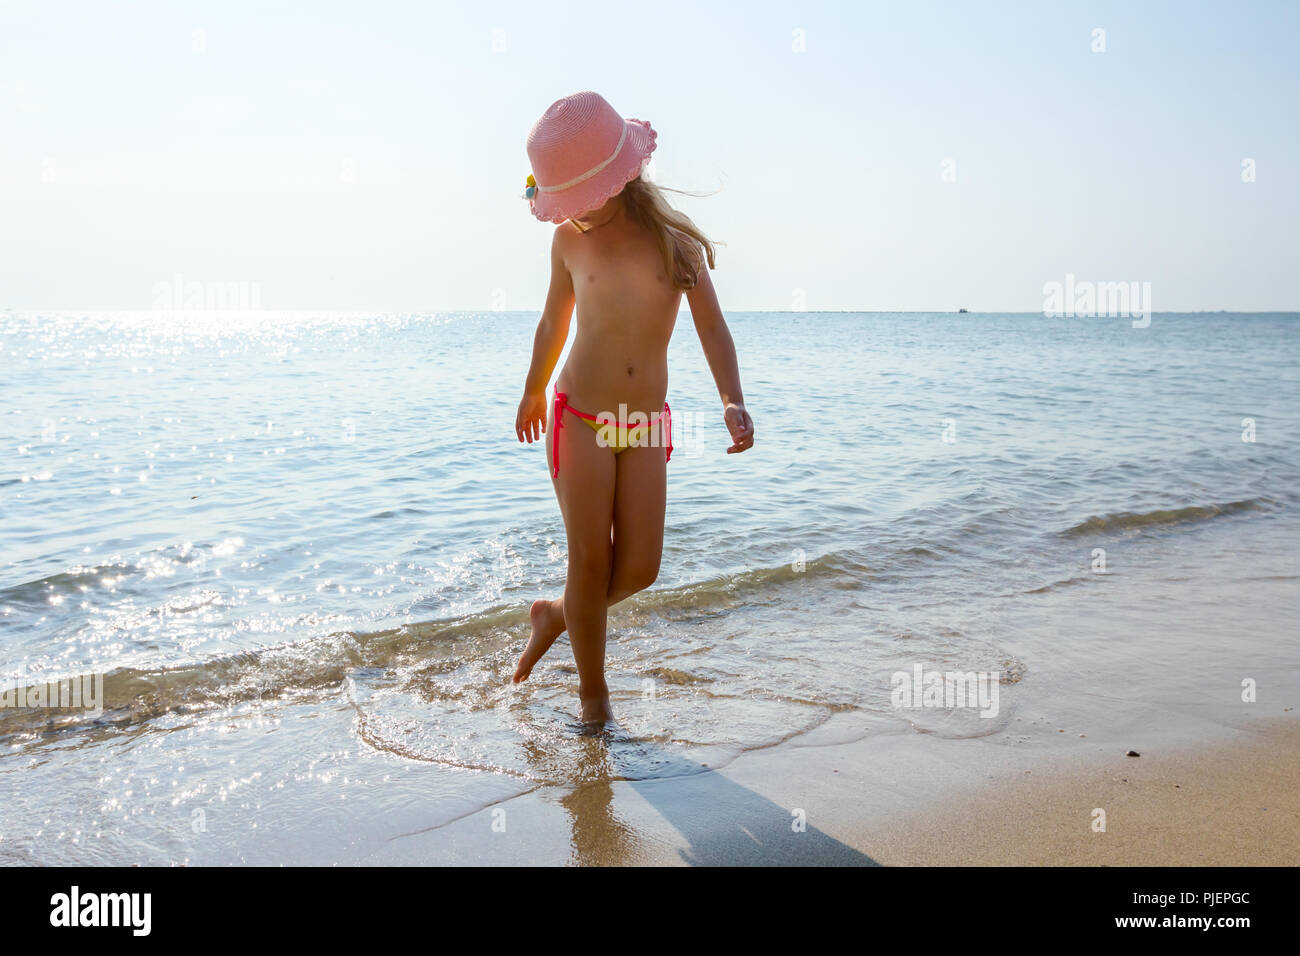 Child bikini hi-res stock photography and images - Alamy